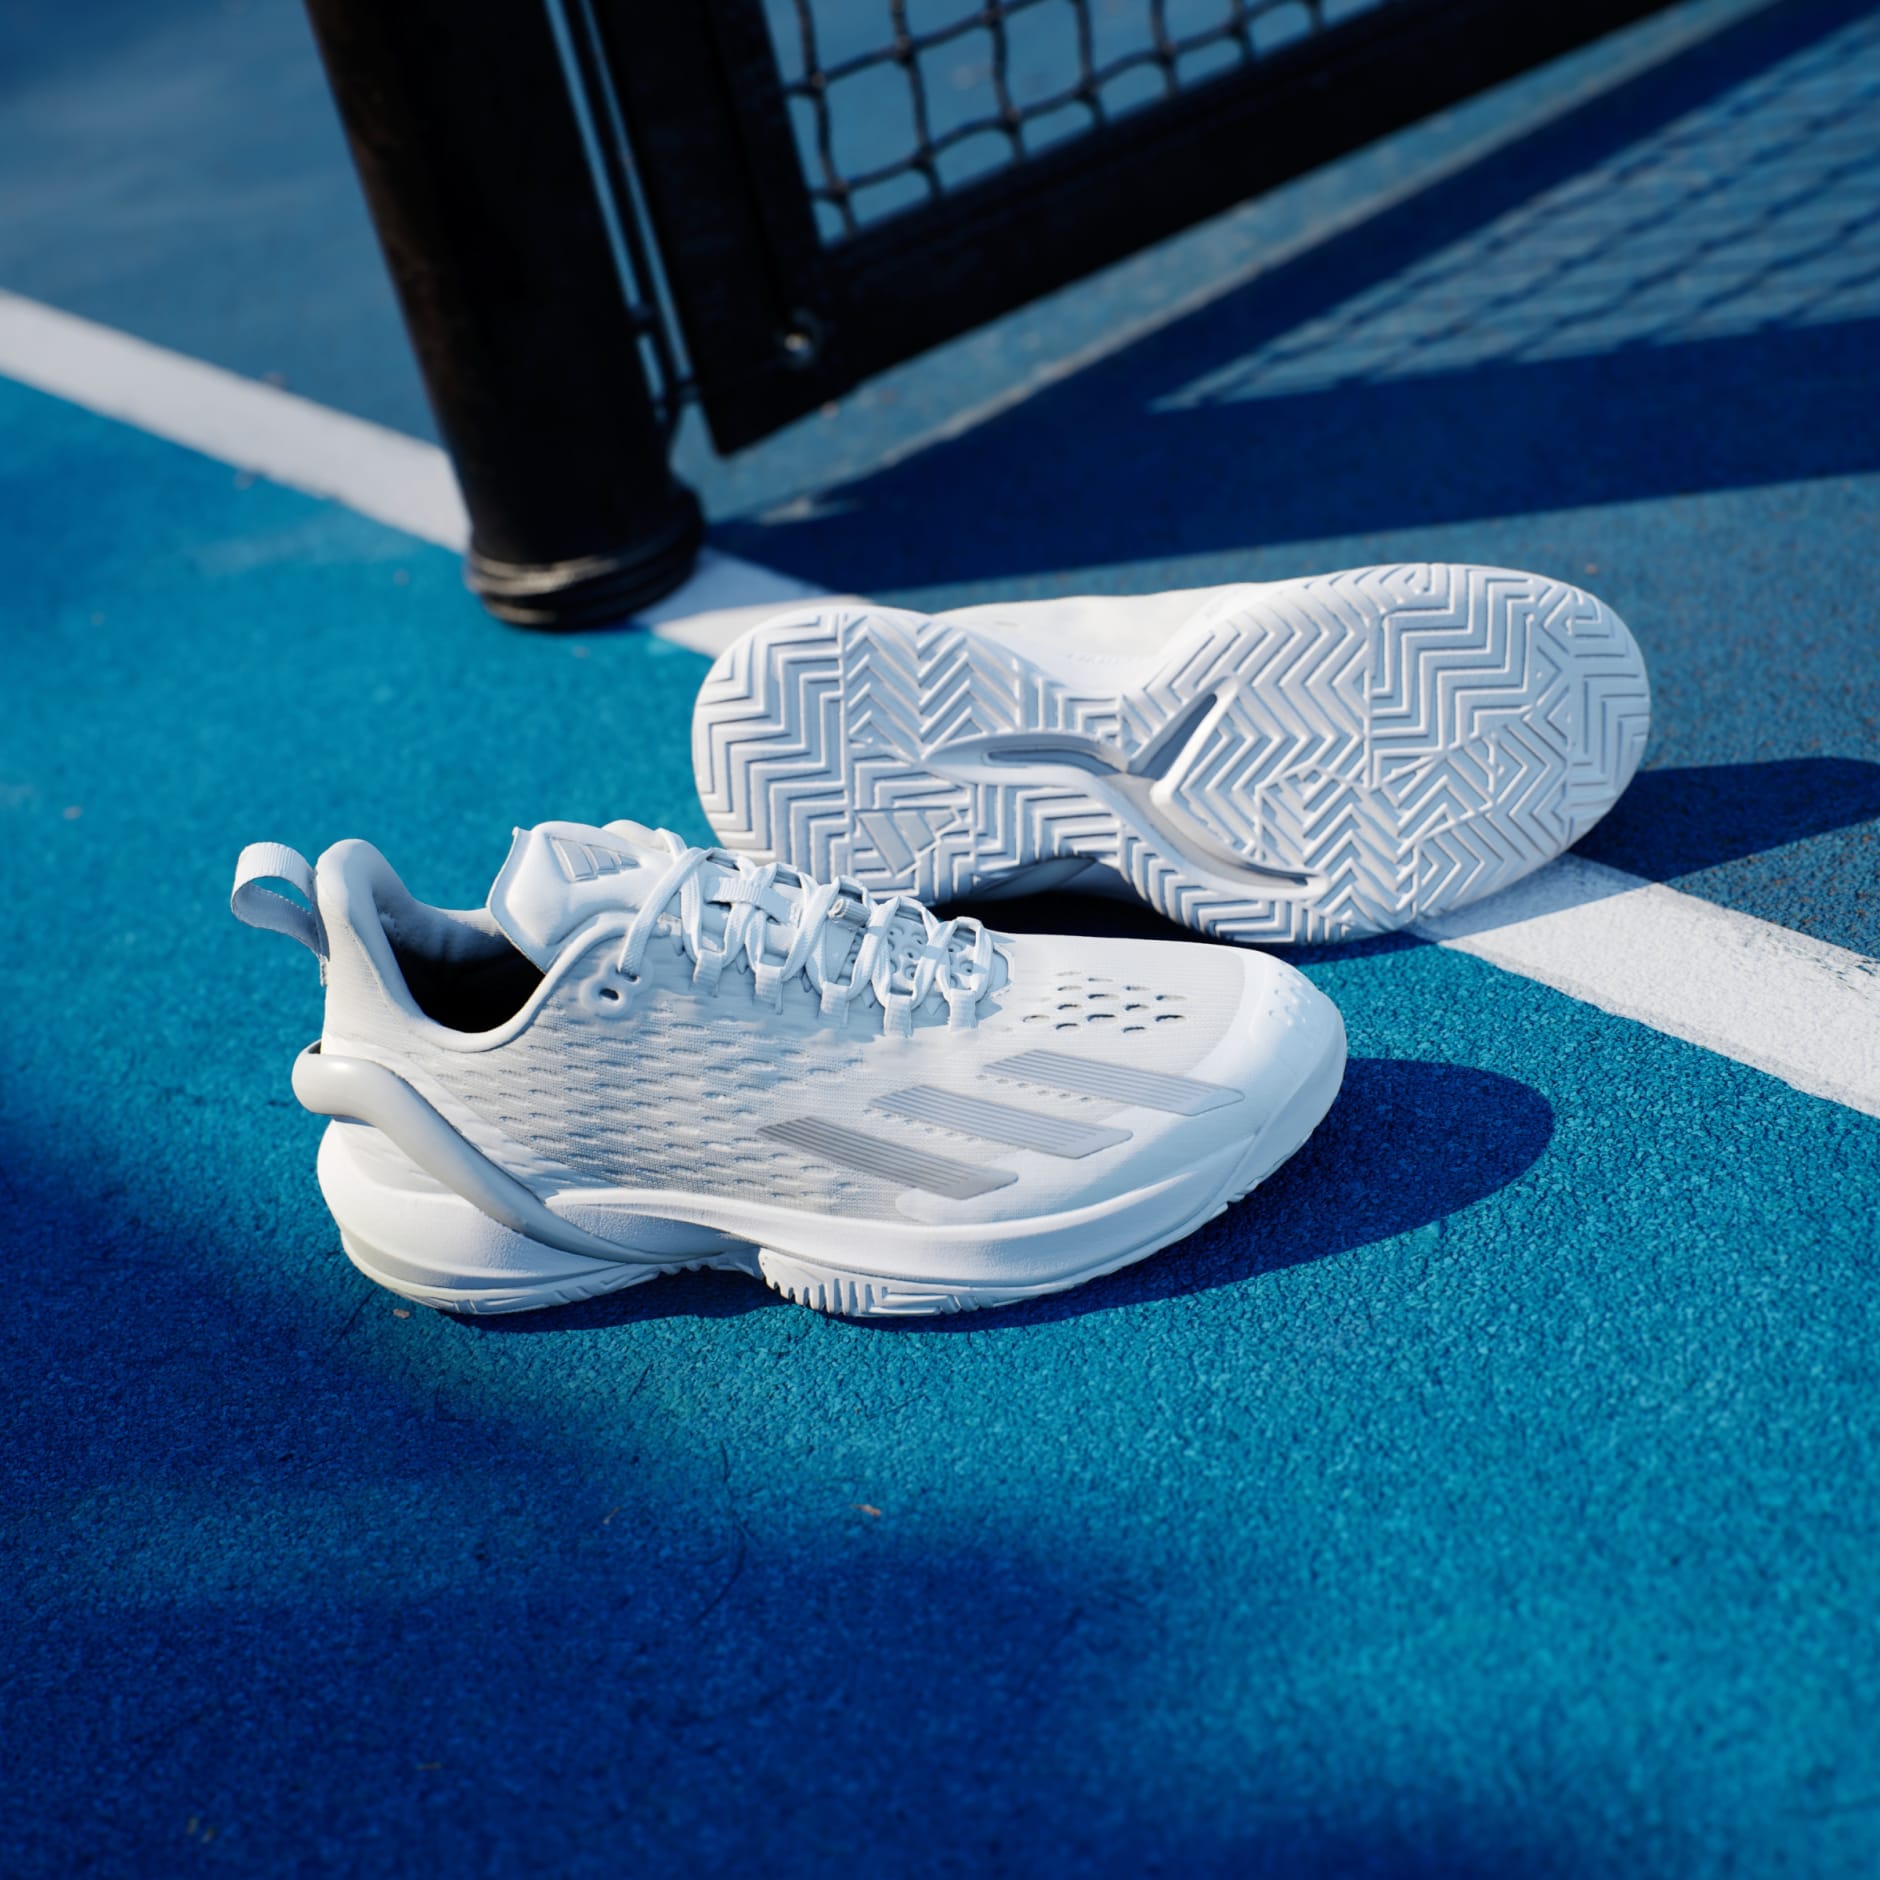 Chaussures de tennis pour homme adidas Adizero Cybersonic White